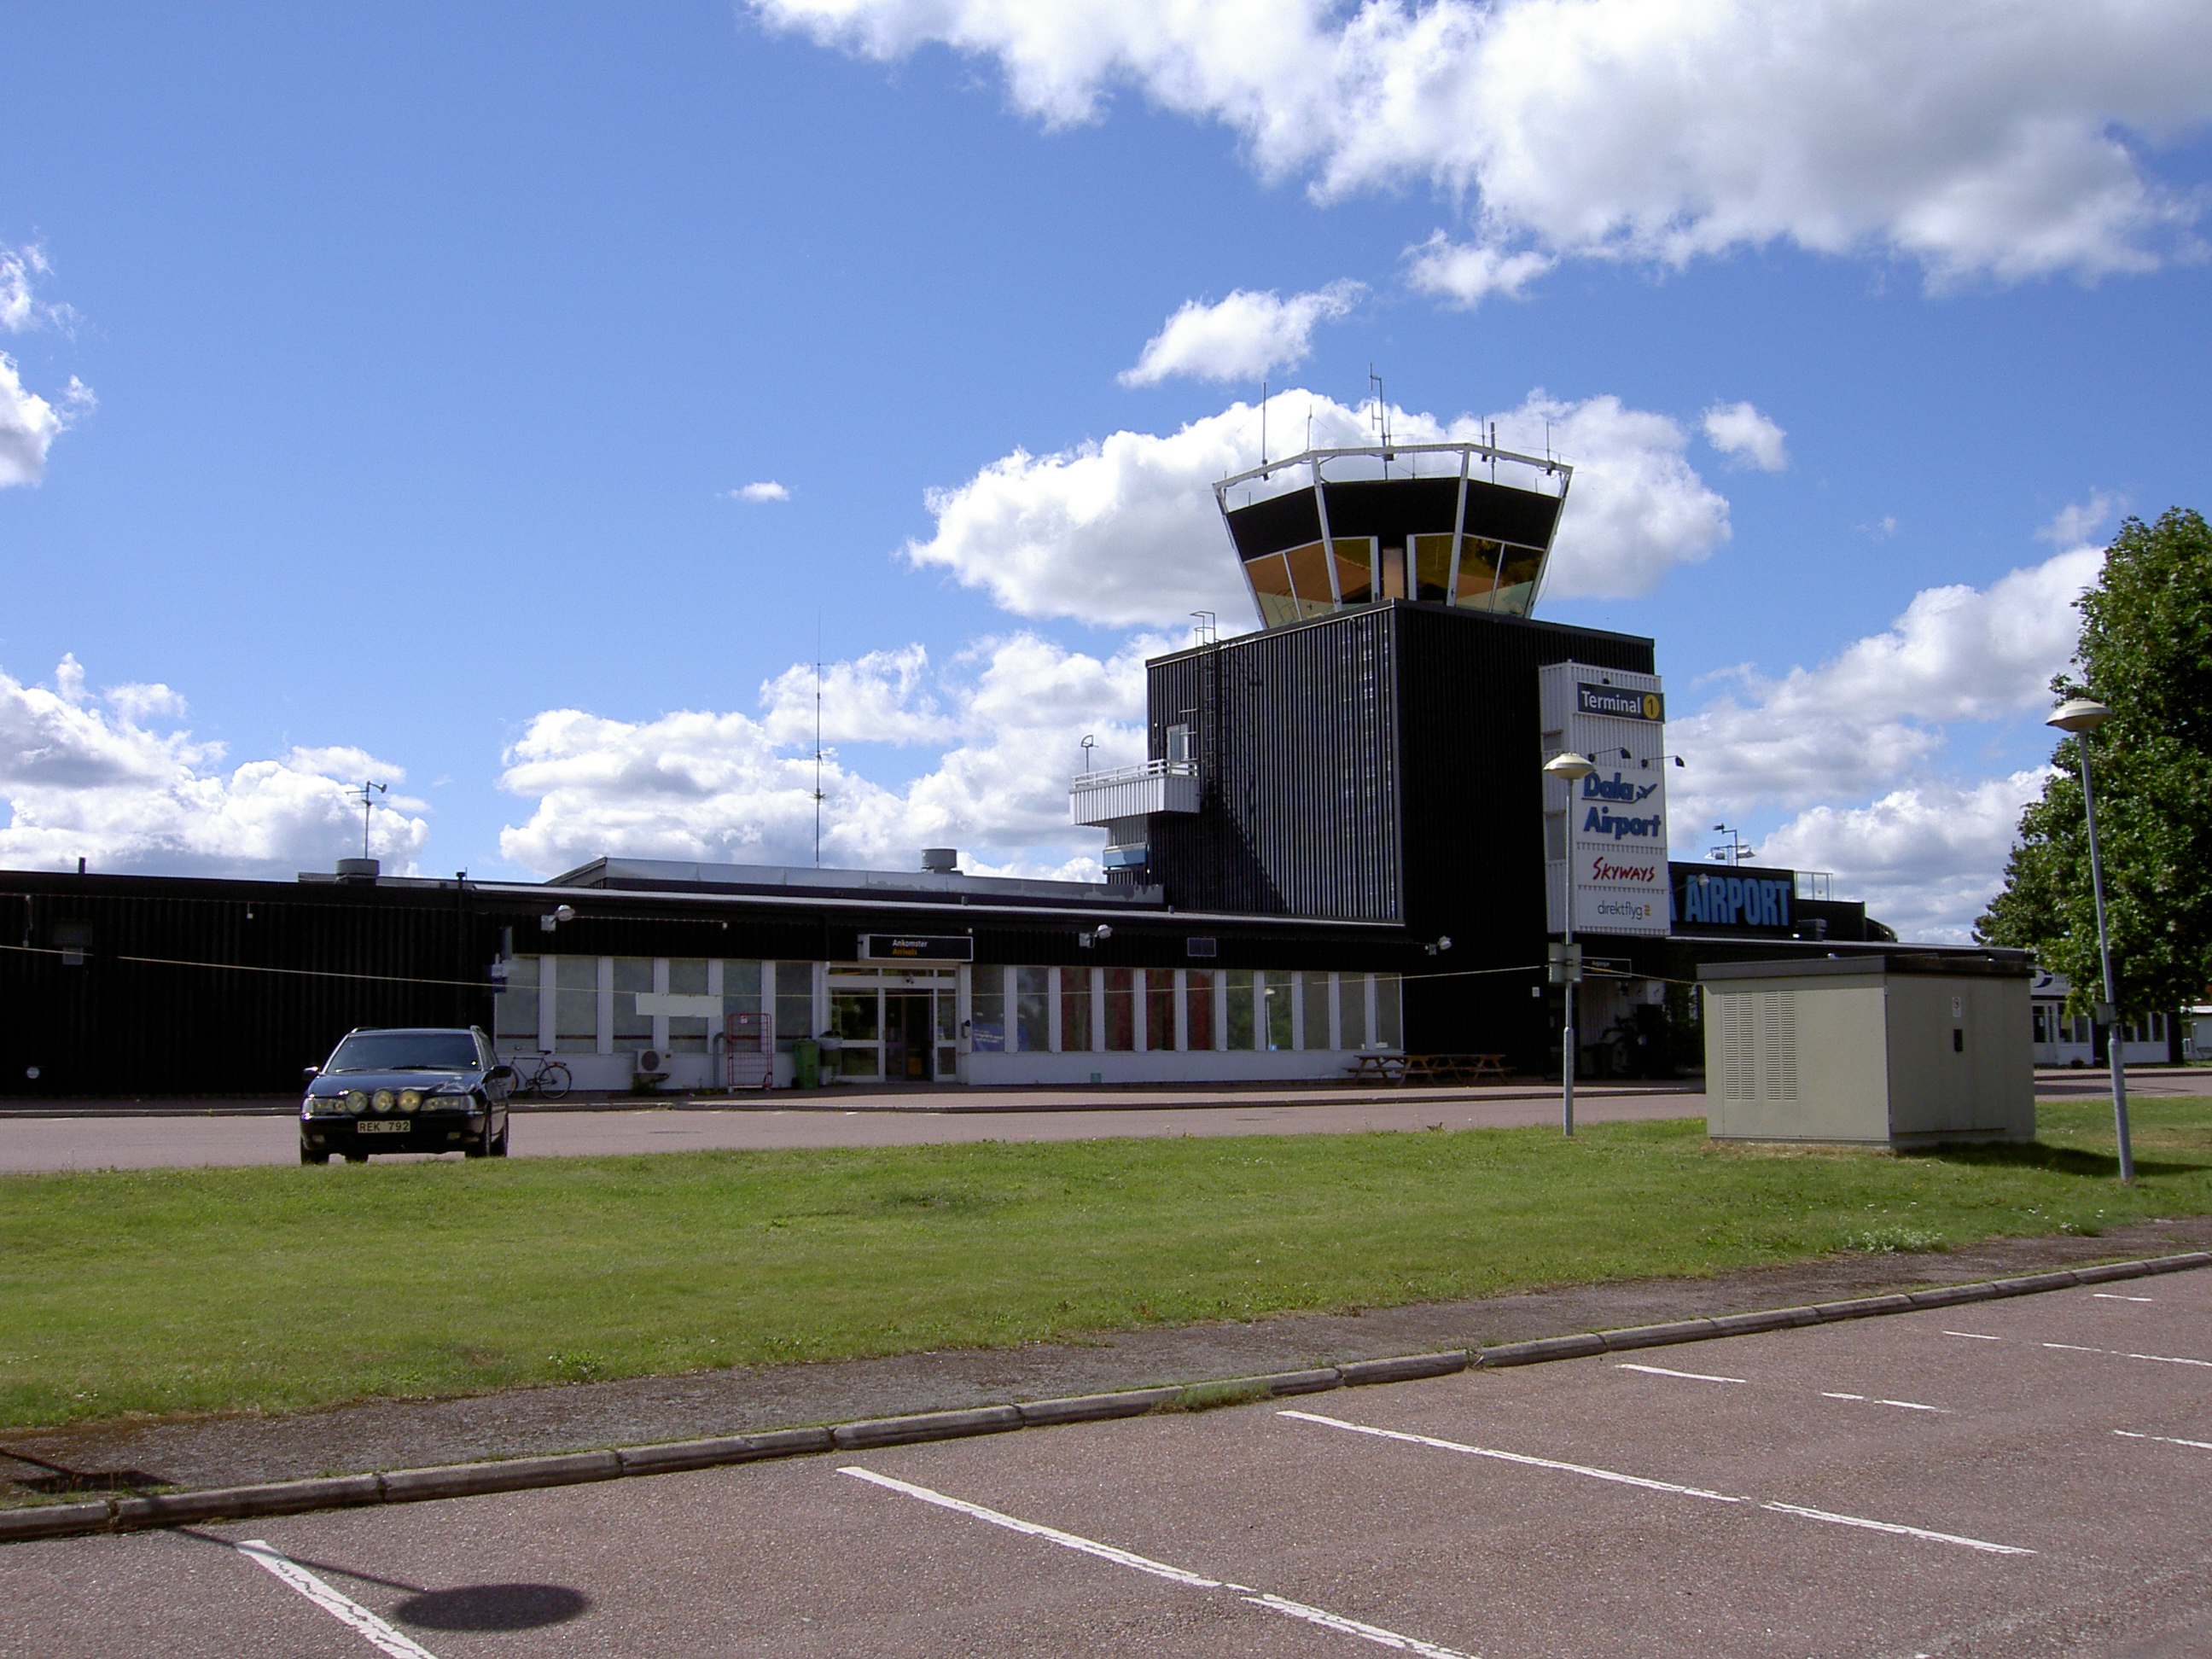 Borlänge or Dala Airport